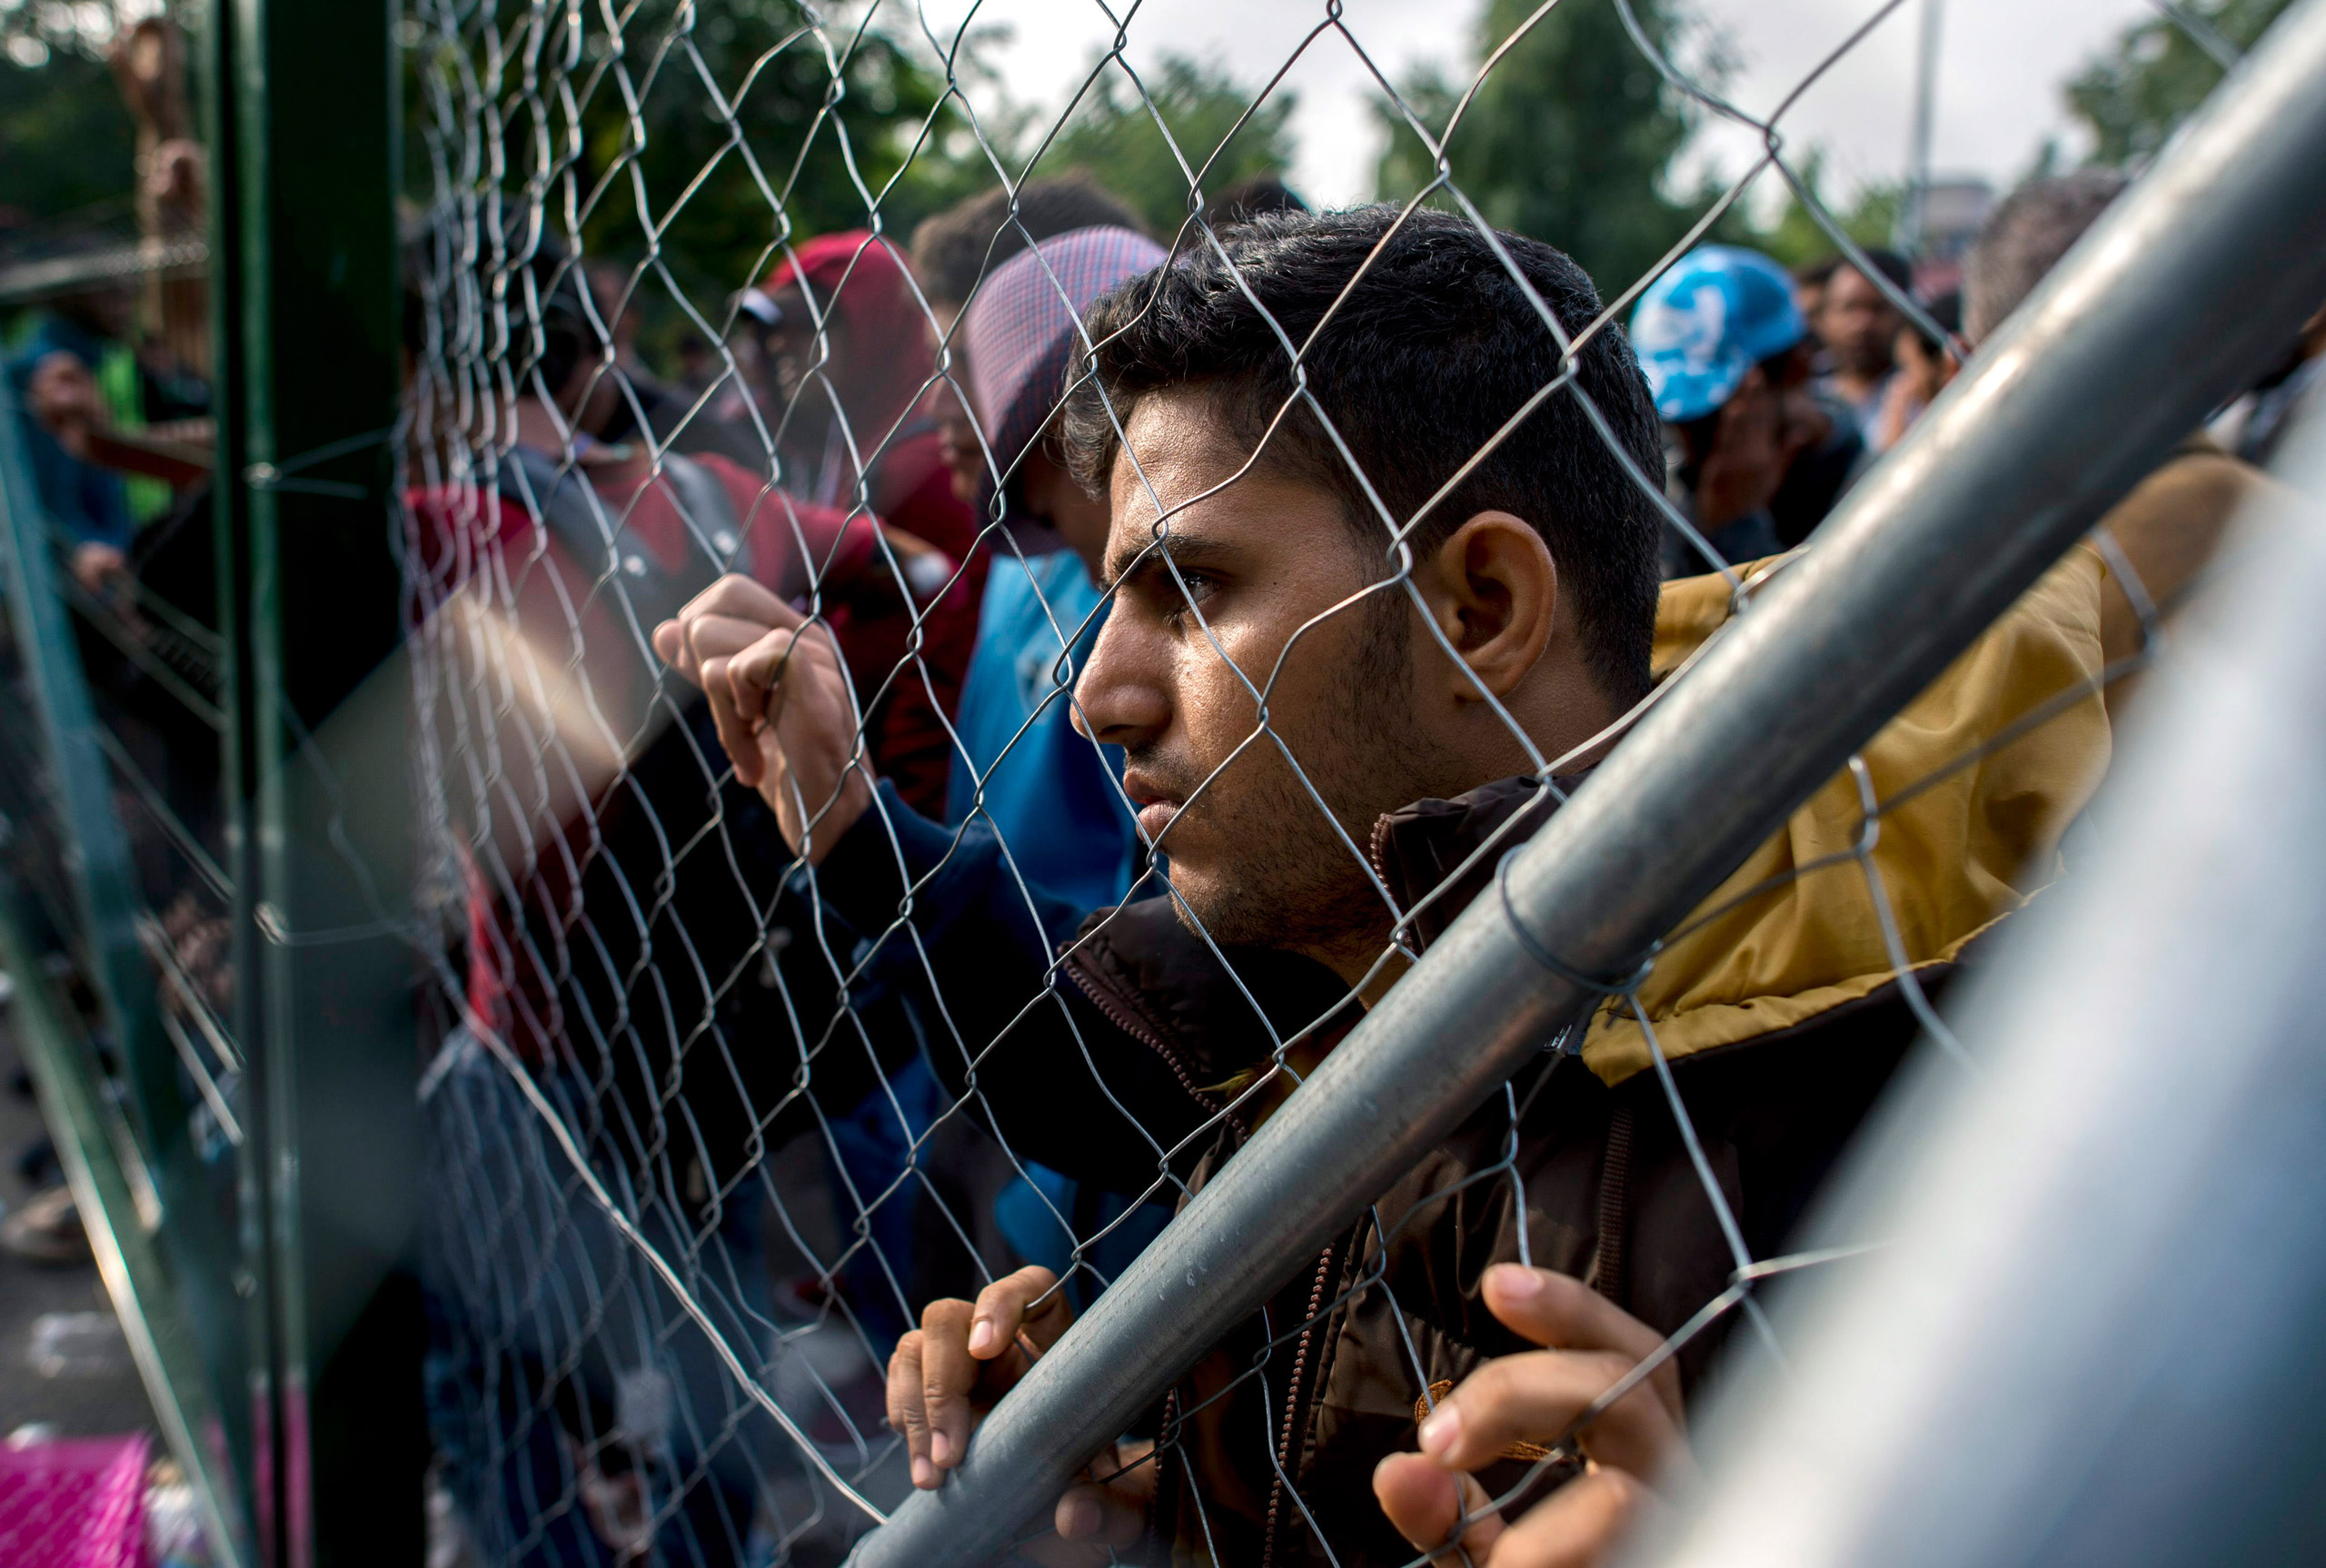 A migrant looks through a fence at the closed Roszke-Horgos border crossing at the border between Hungary and Serbia near Horgos, Serbia, Tuesday, Sept.15, 2015. (Tamas Soki/MTI via AP)